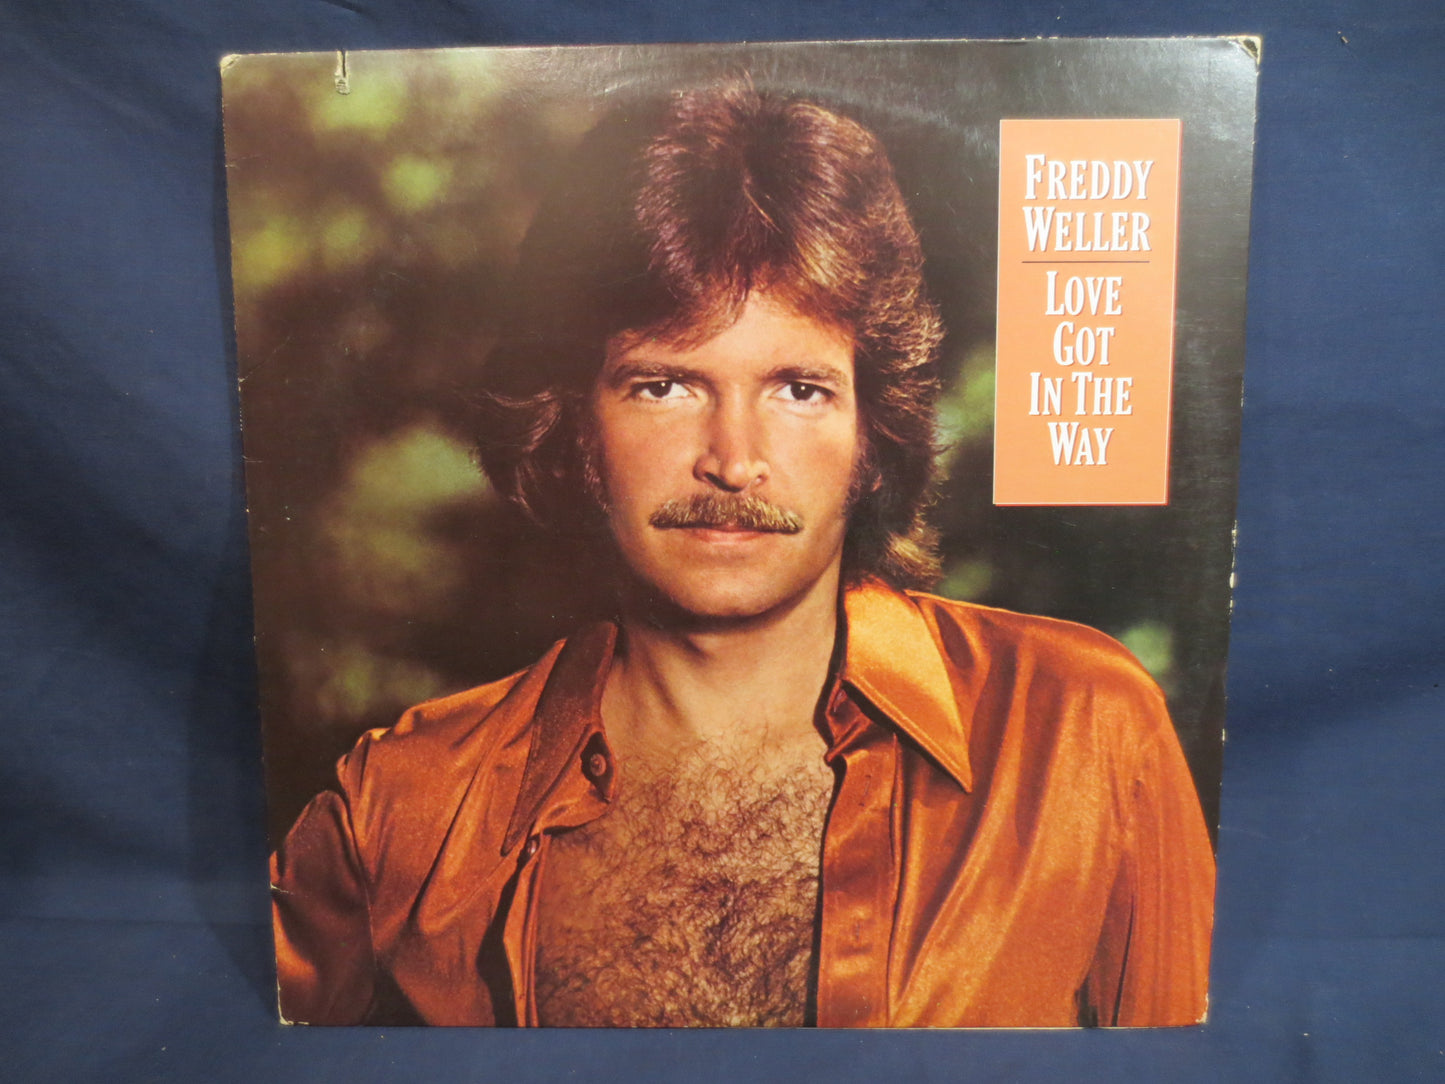 FREDDY WELLER, LOVE Got in the Way, Freddy Weller Record, Freddy Weller Albums, Lps, Freddy Weller Lp, Vinyl, 1978 Records